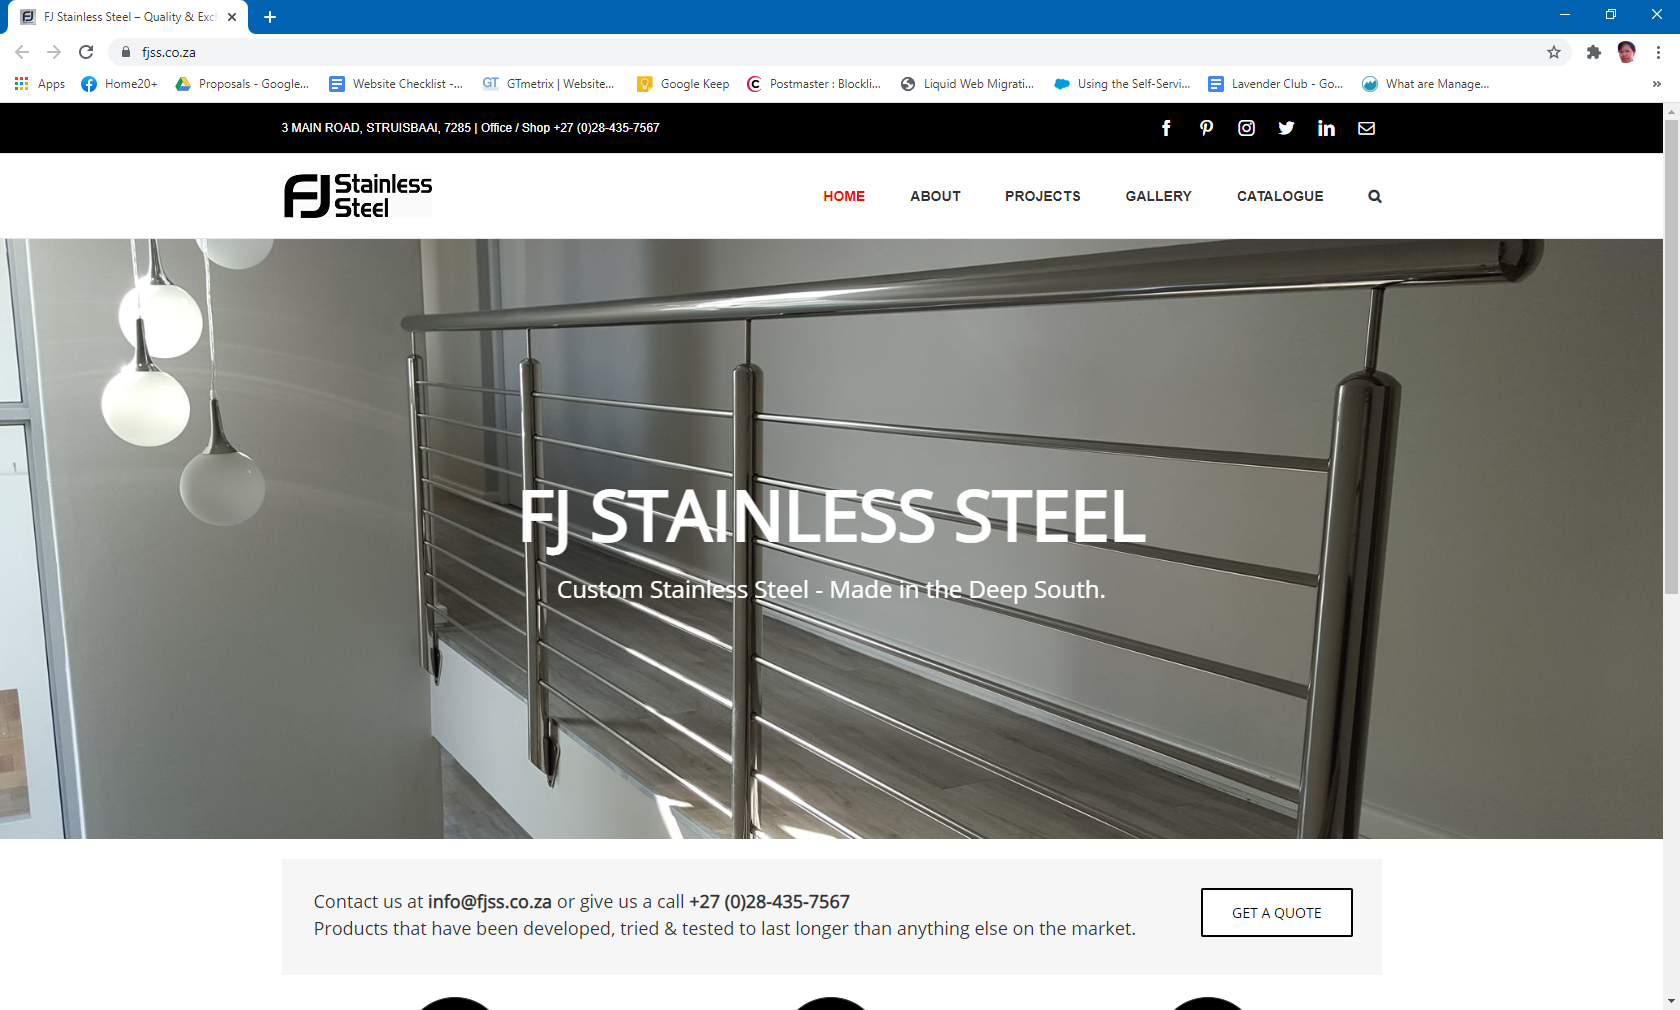 FJ Stainless Steel